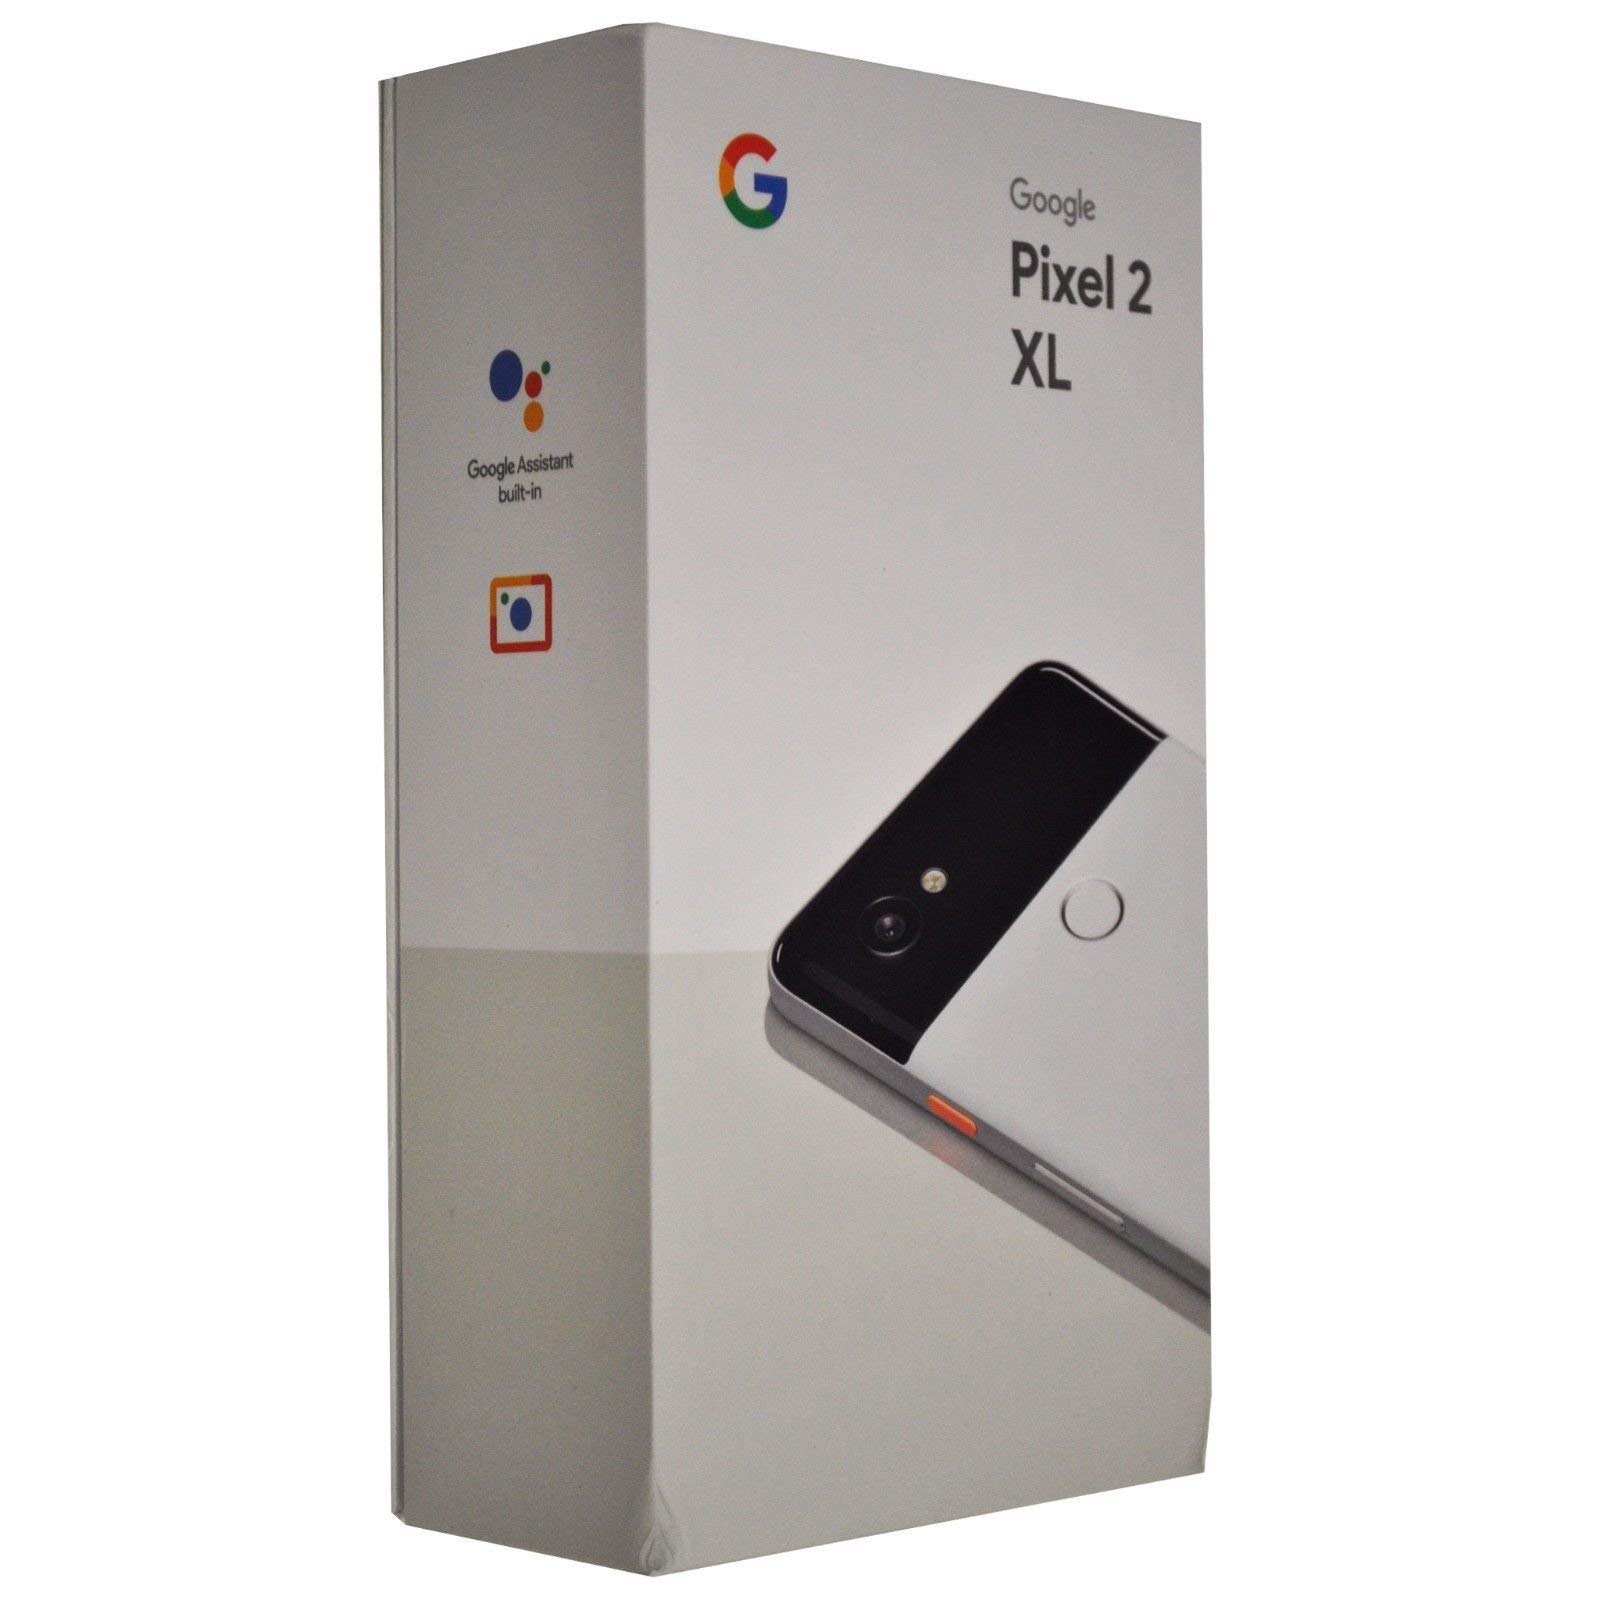 Google Pixel 2 XL 128GB - 4G LTE GSM Factory Unlocked, Google Edition -  International Model - Black